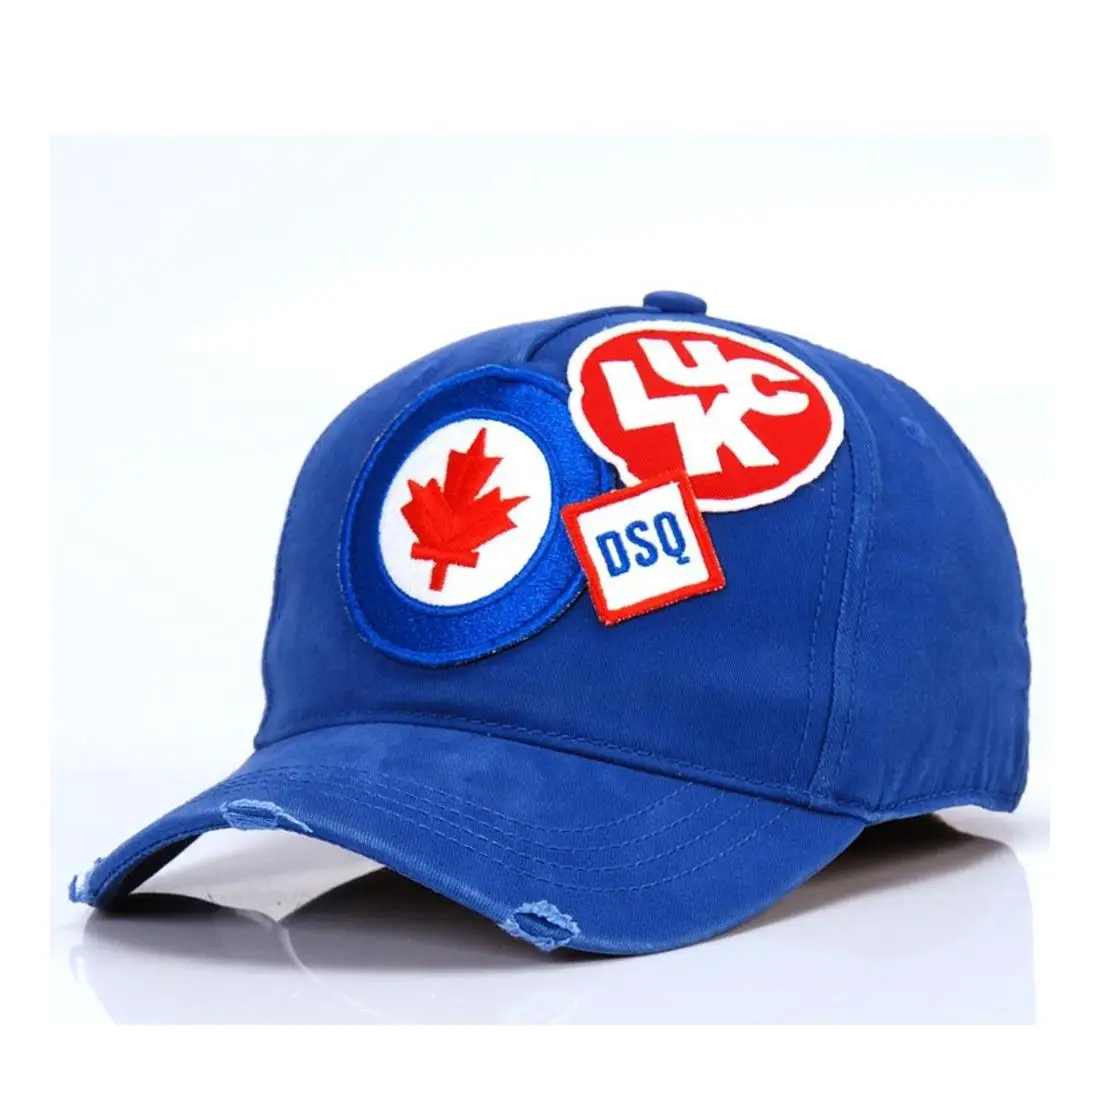 

2020 Style Dsqicond2 Embroidery Hats & Caps Men Women Snapback Cap For Men Baseball Hat Golf Gorras Bone Casquette D2 Hat D70